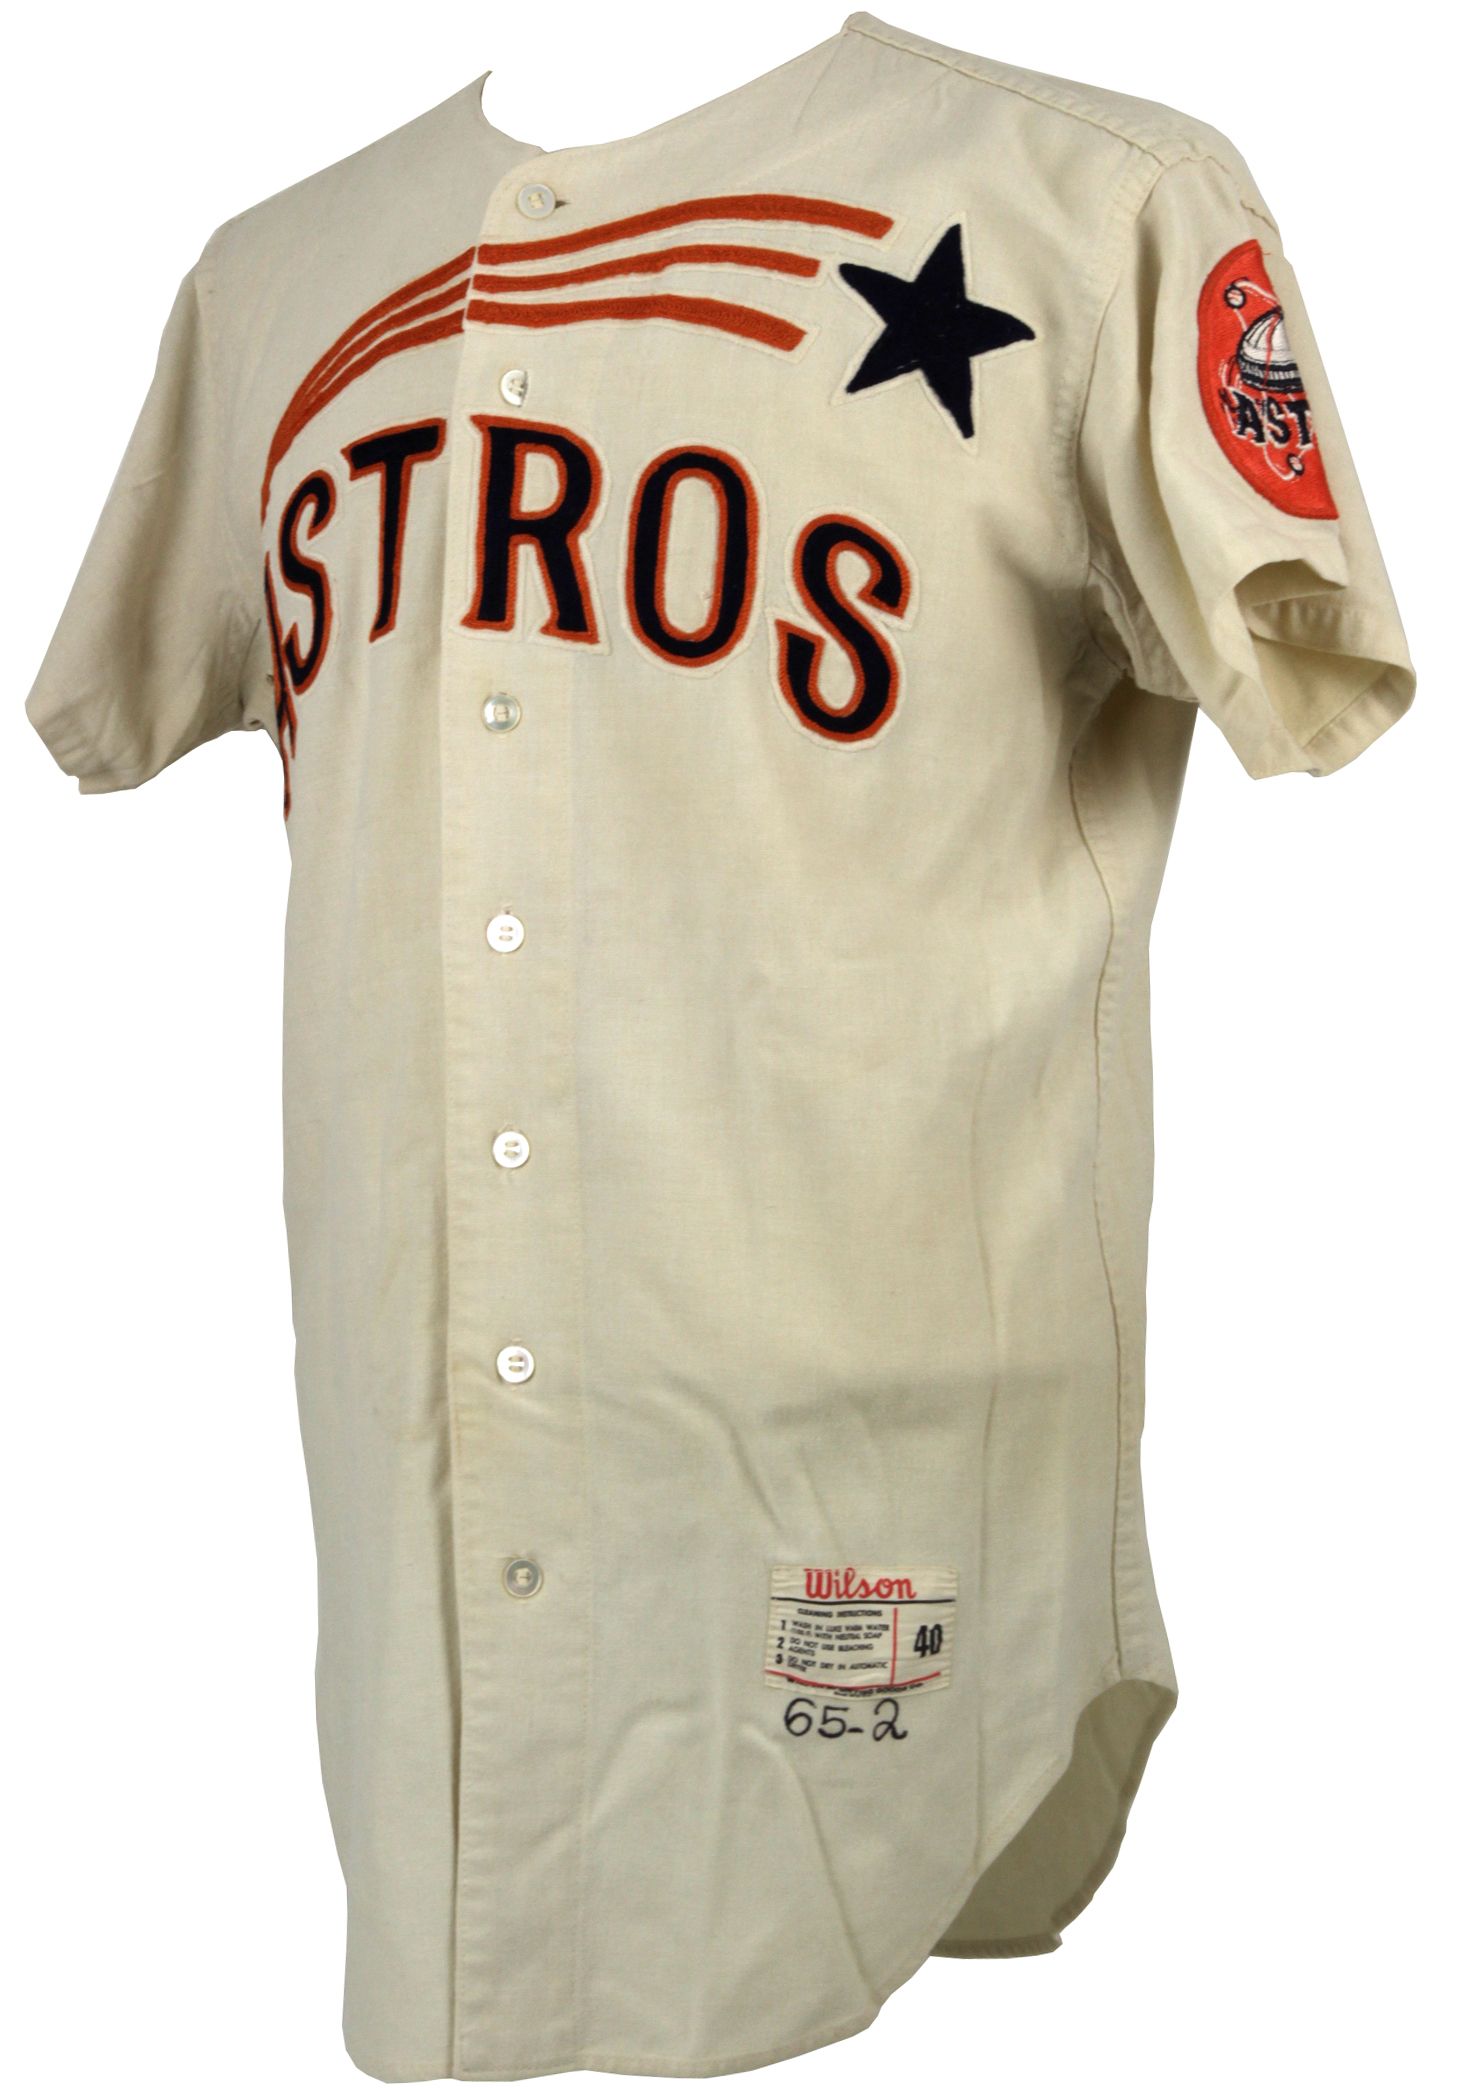 1965 astros jersey